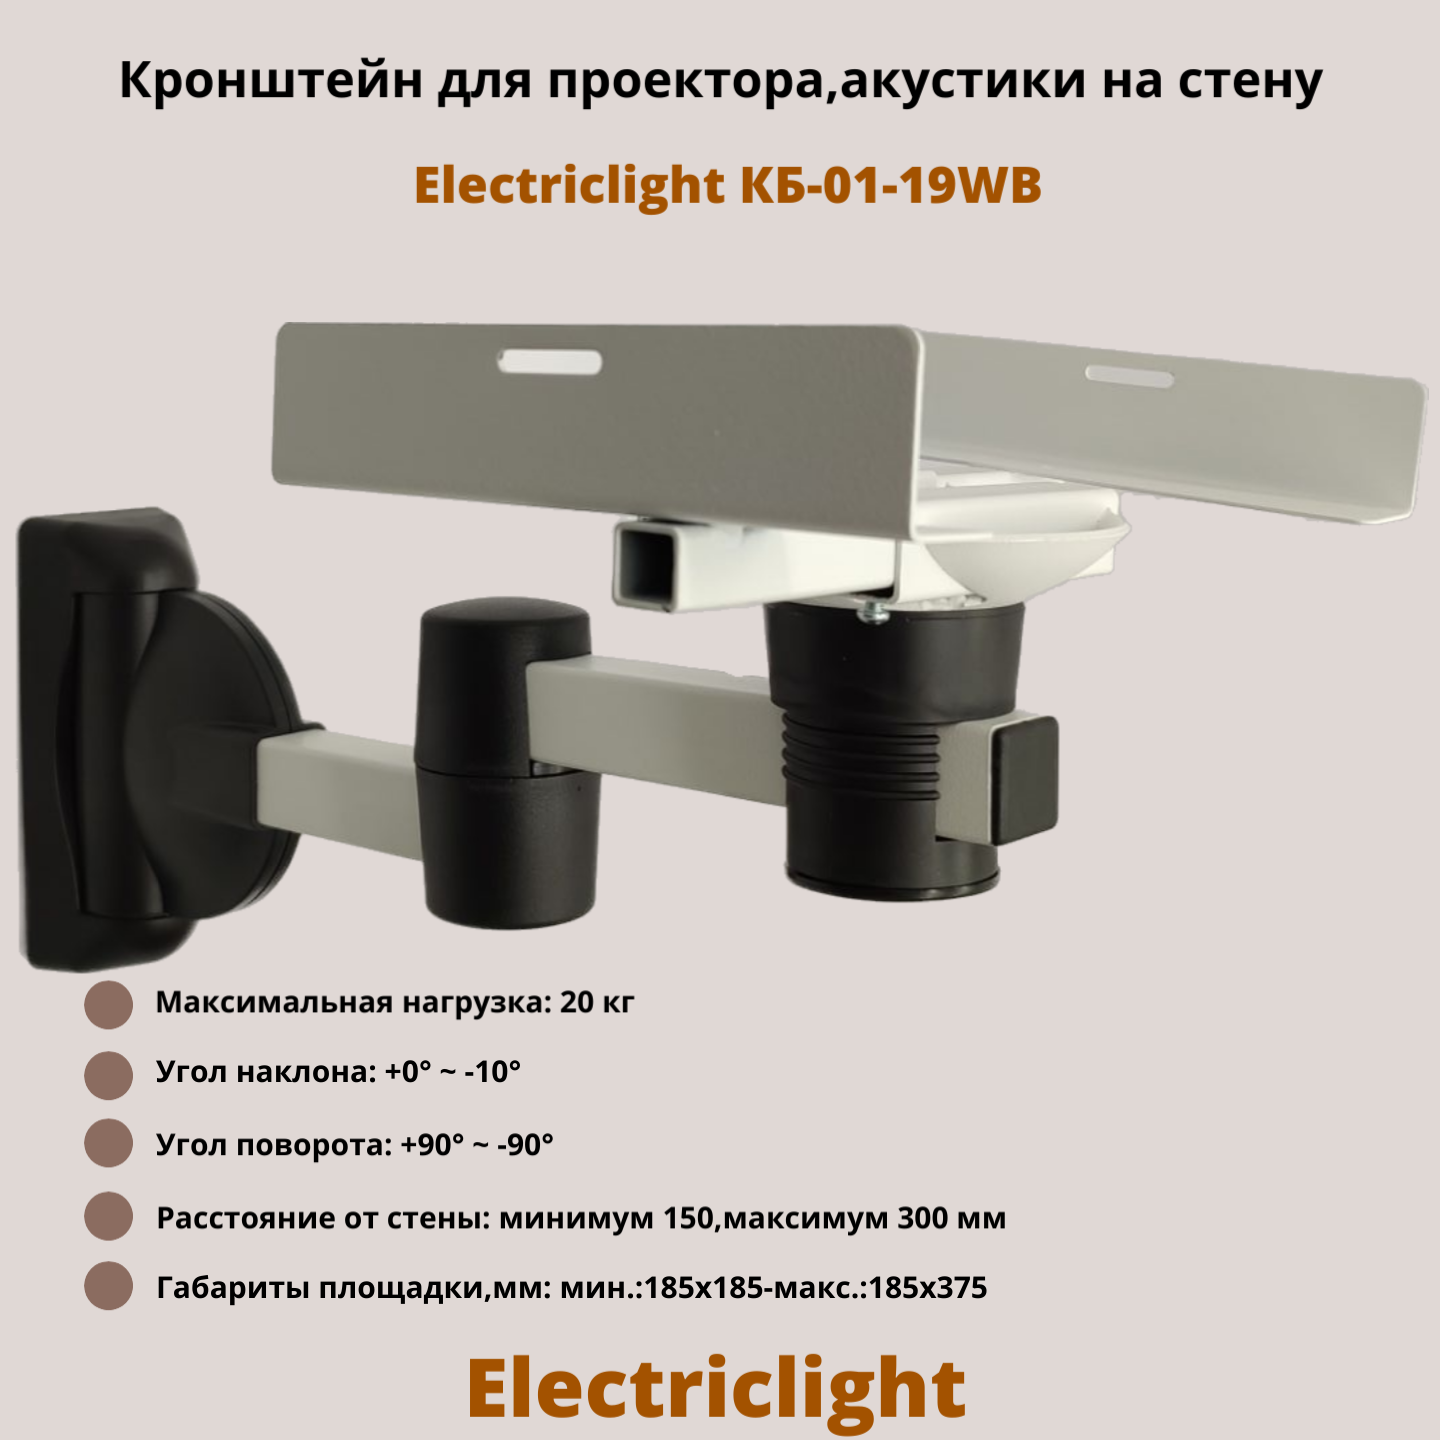 Кронштейн для проектора, акустики на стену наклонно-поворотный Electriclight КБ-01-19WB, белый/черный